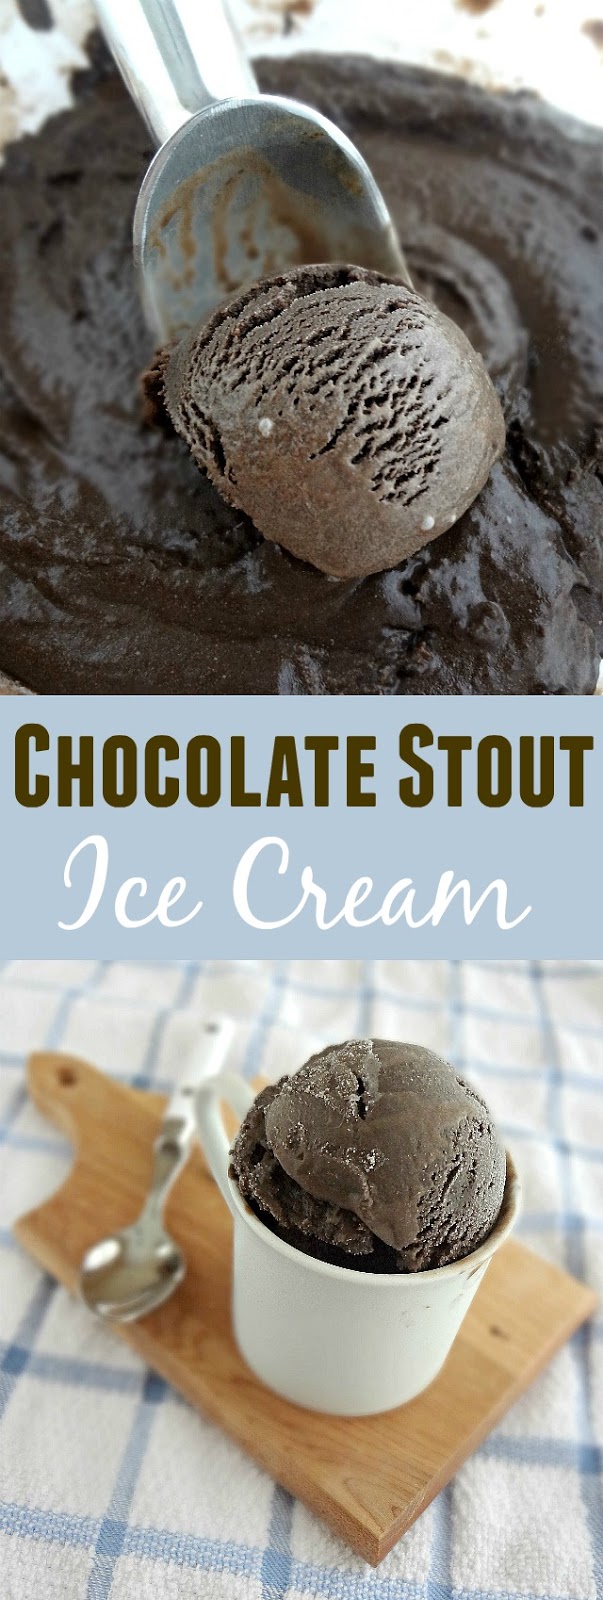 Chocolate Stout Ice Cream